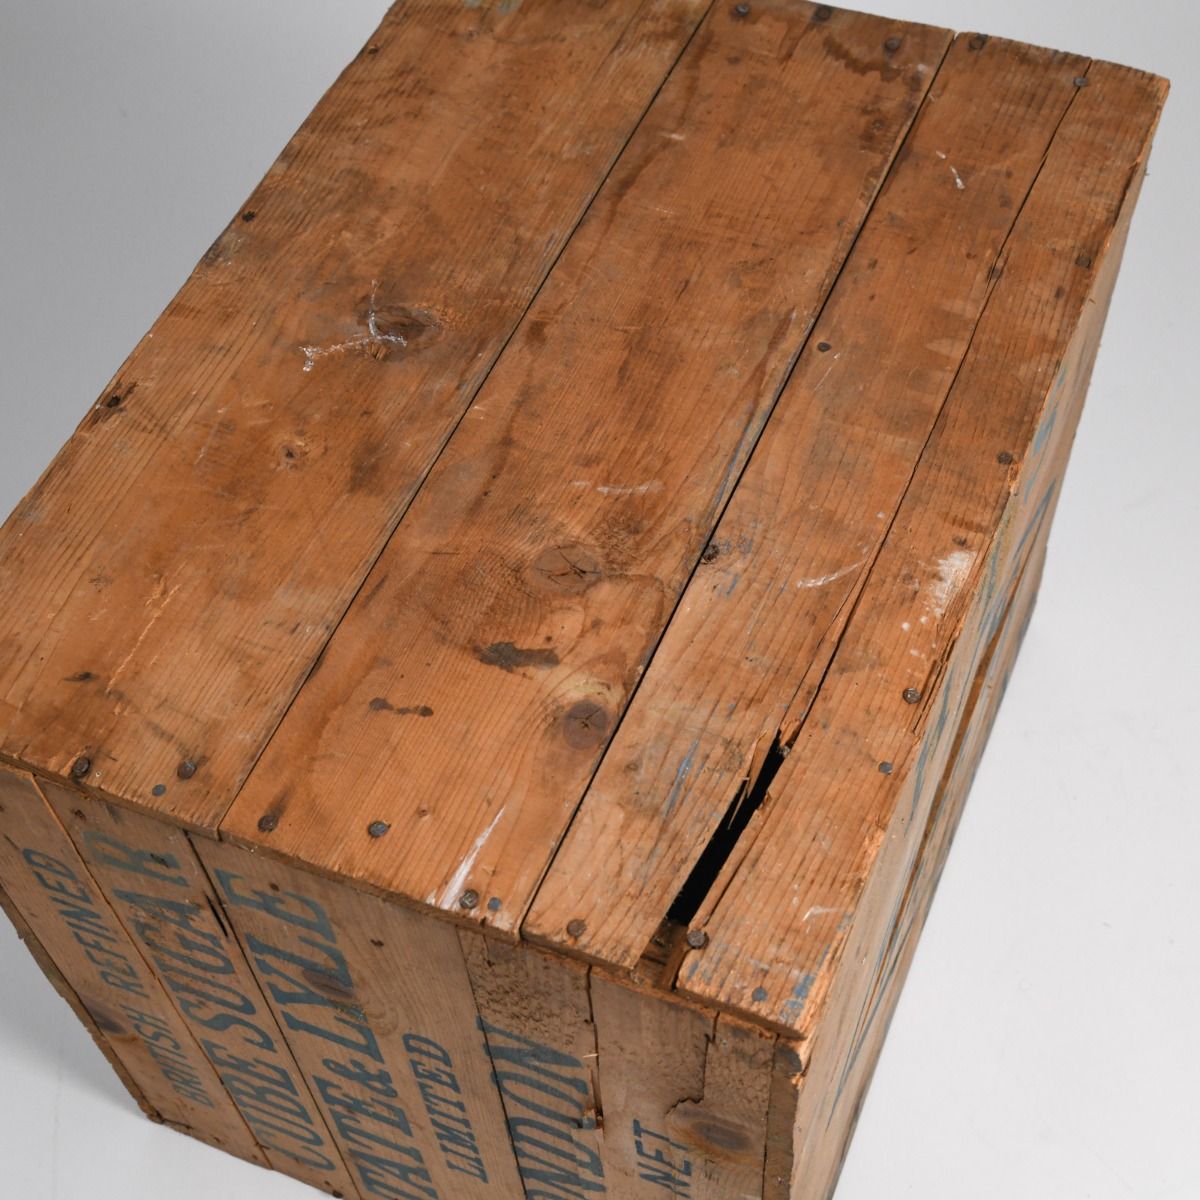 Vintage Tate & Lyle Mid-Century Wooden Sugar Storage Crate